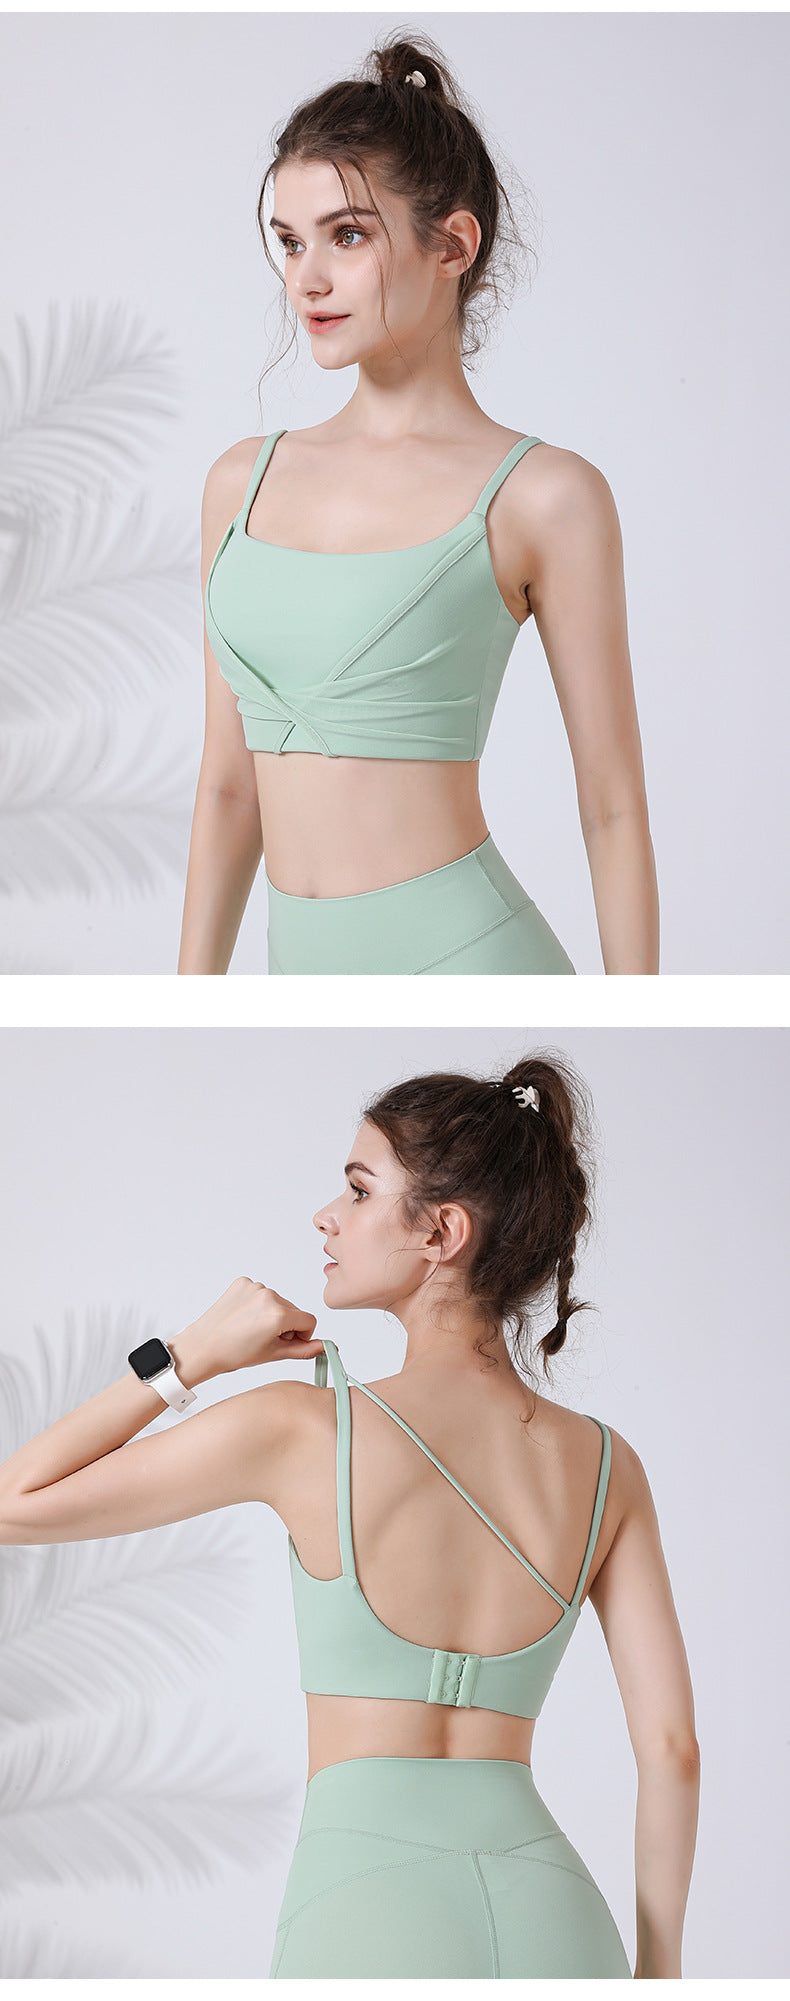 Summer new U-shaped beautiful back sports bra women's mesh twisted high elastic shoulder straps running fitness yoga bra